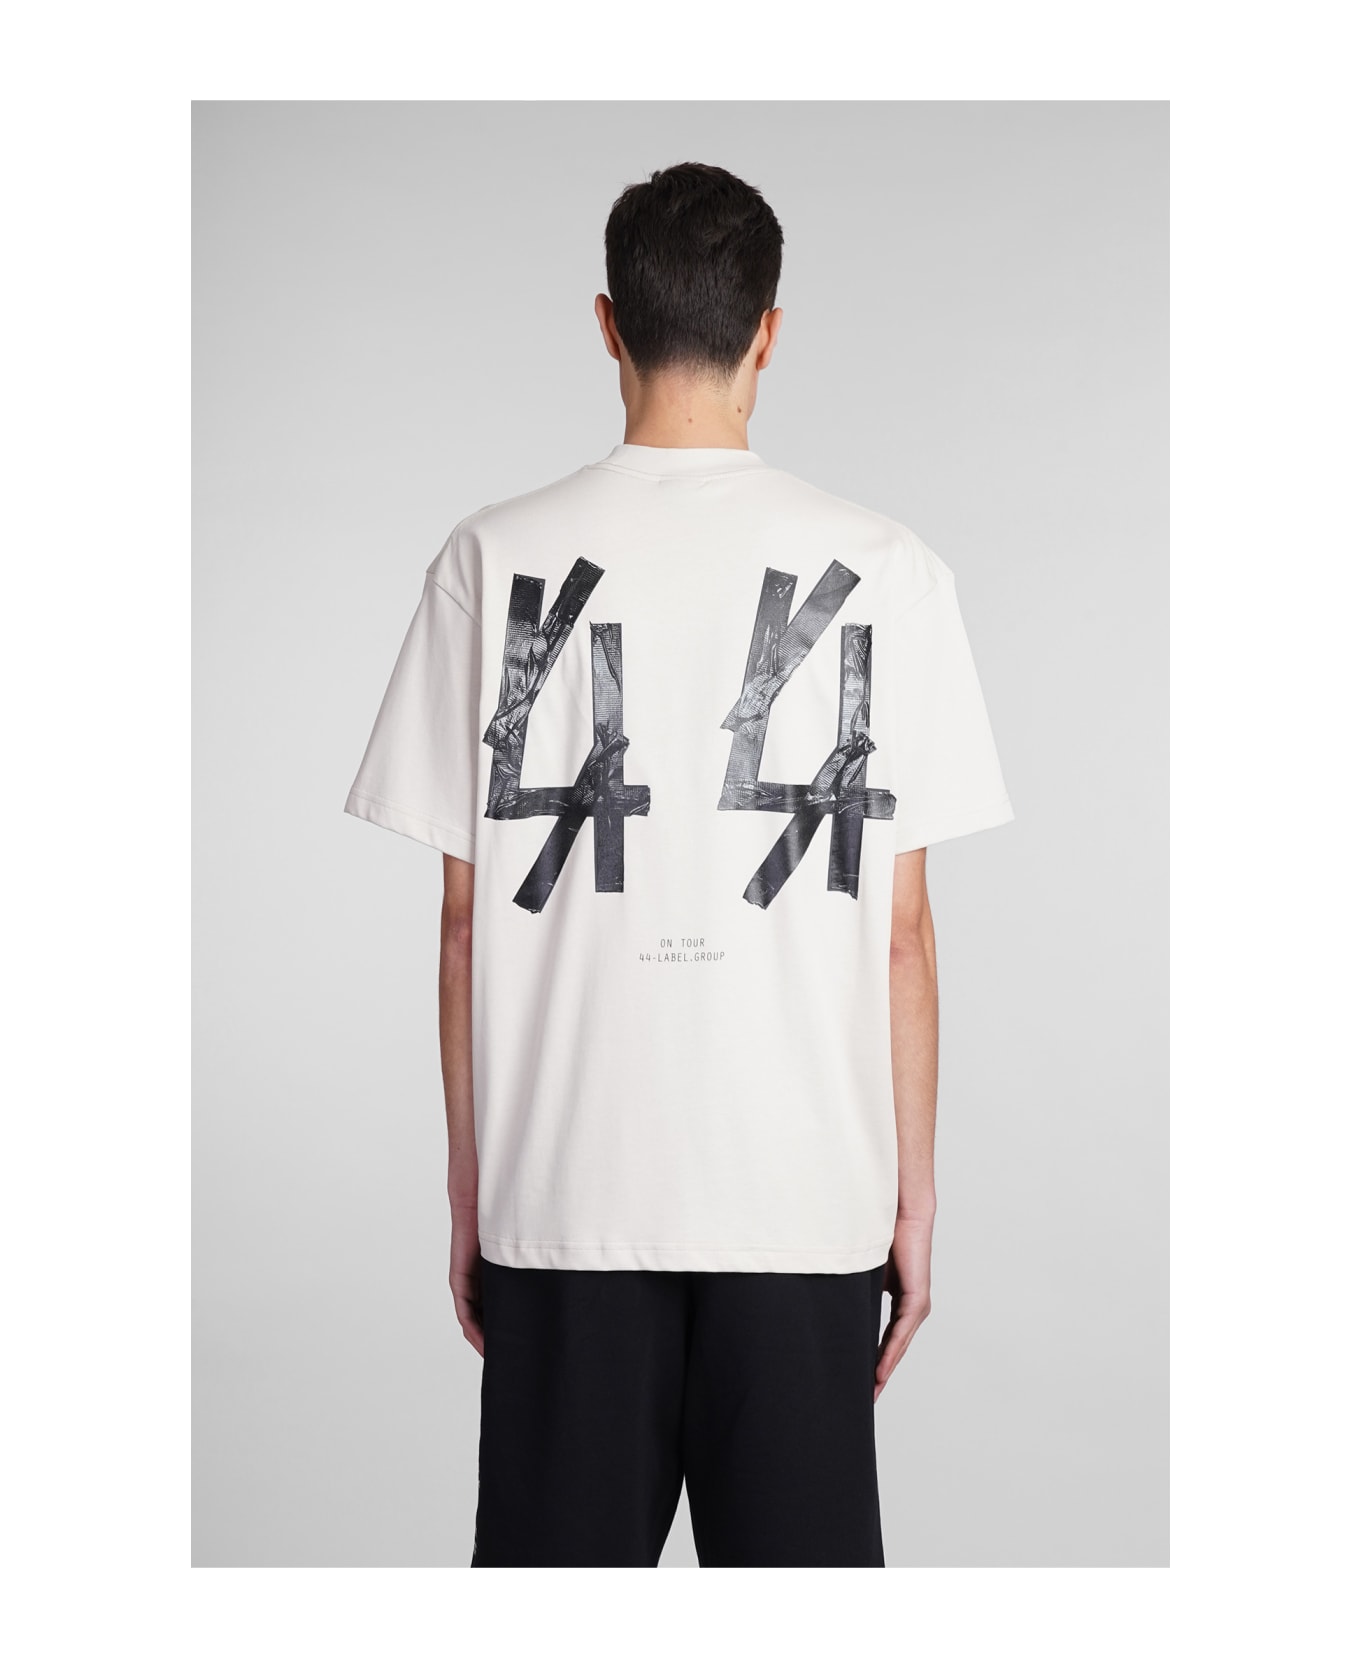 44 Label Group T-shirt In Beige Cotton - beige シャツ